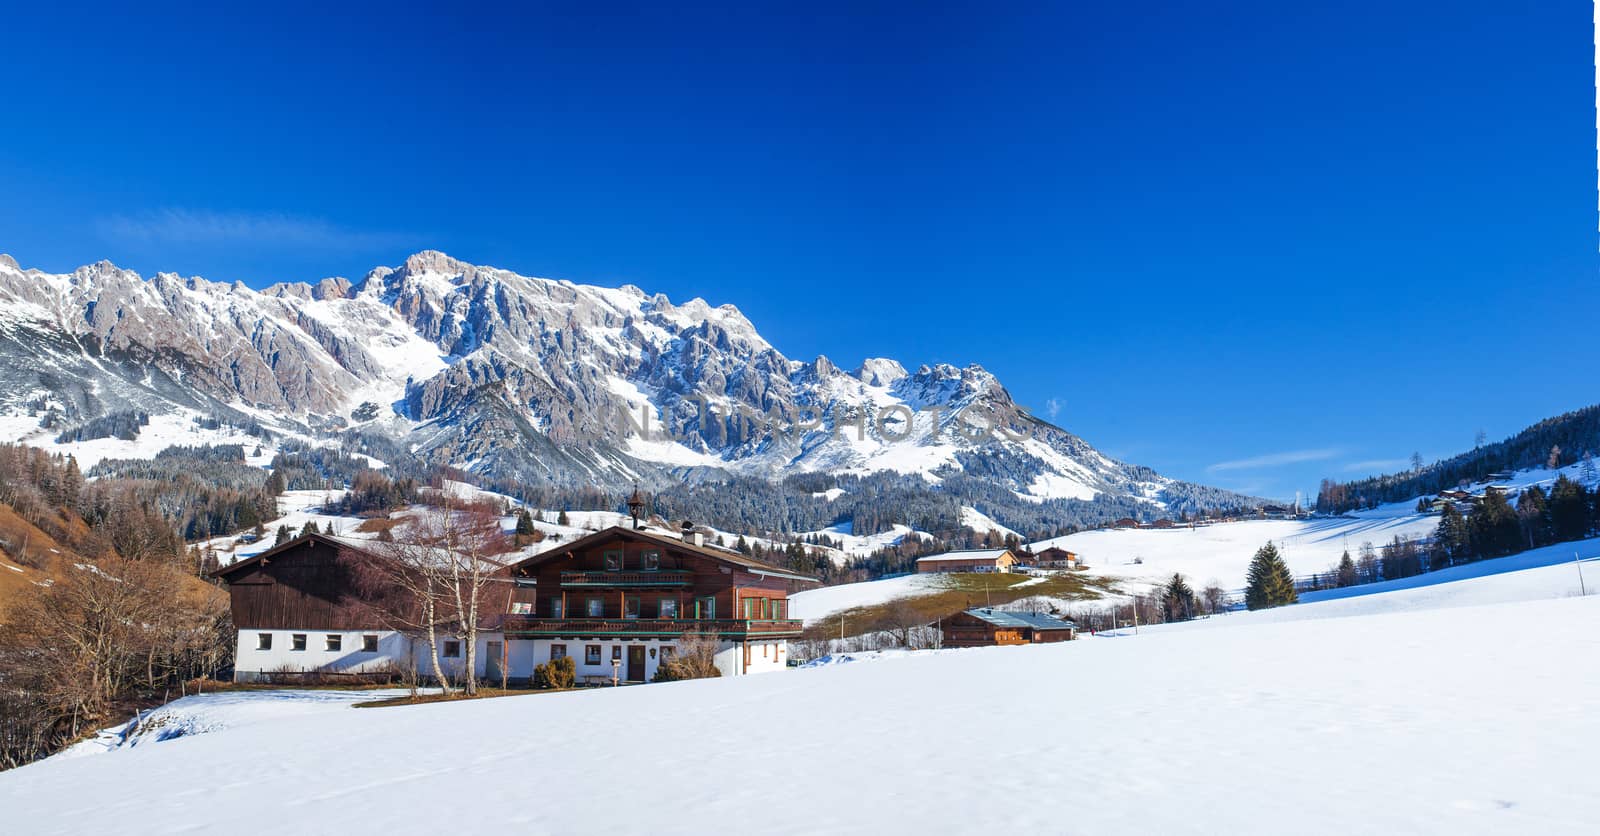 Winter in the Alps, Austria. Panorama shot